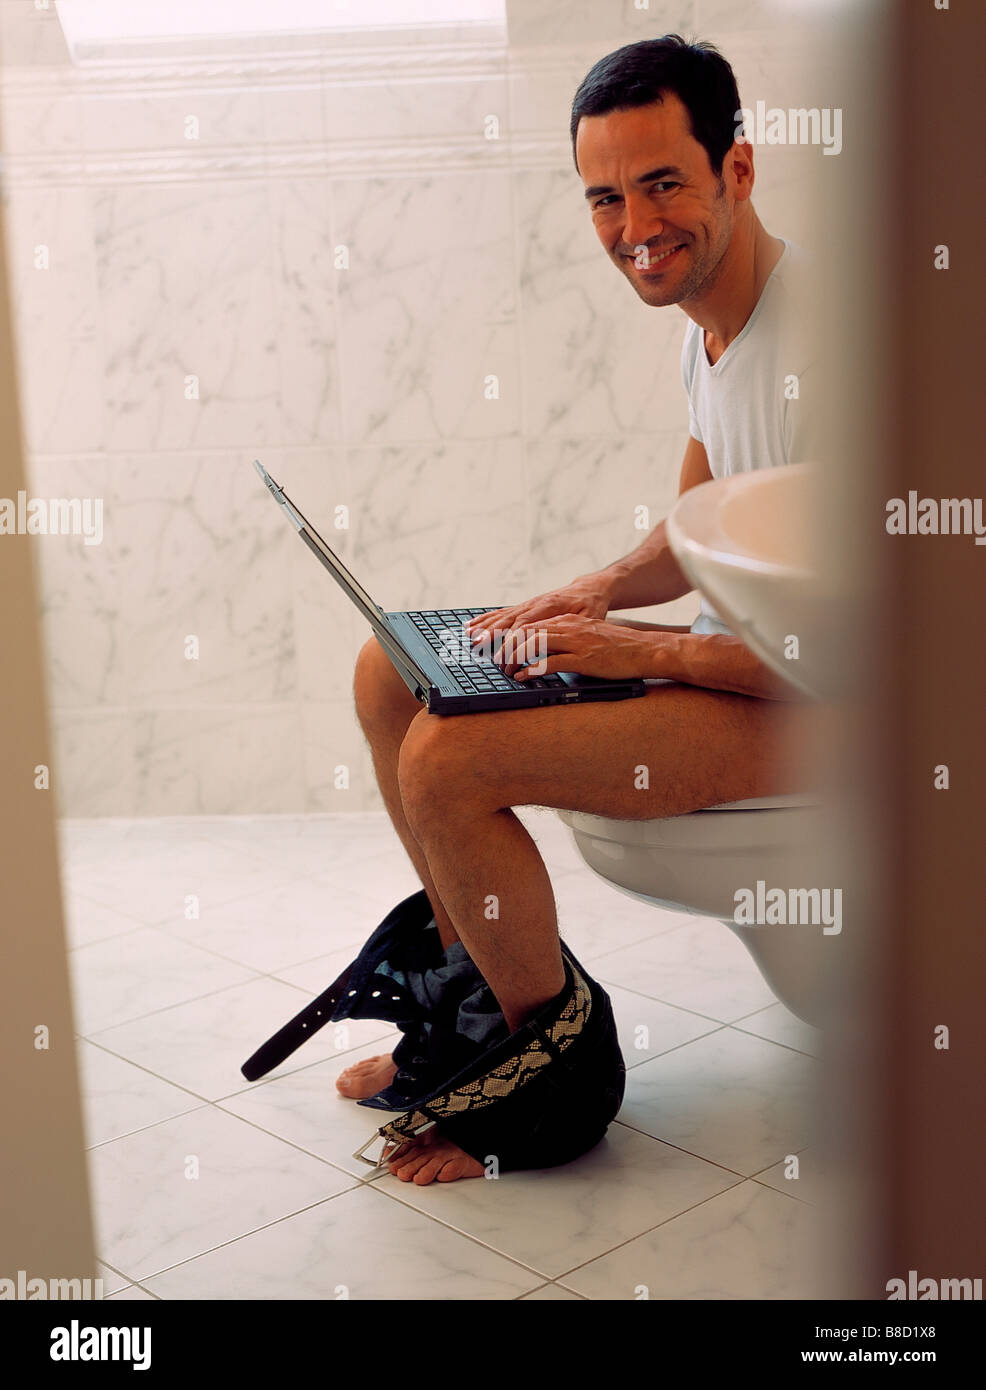 FV3011, Malek Chamoun; Man Bathroom using Laptop Stock Photo